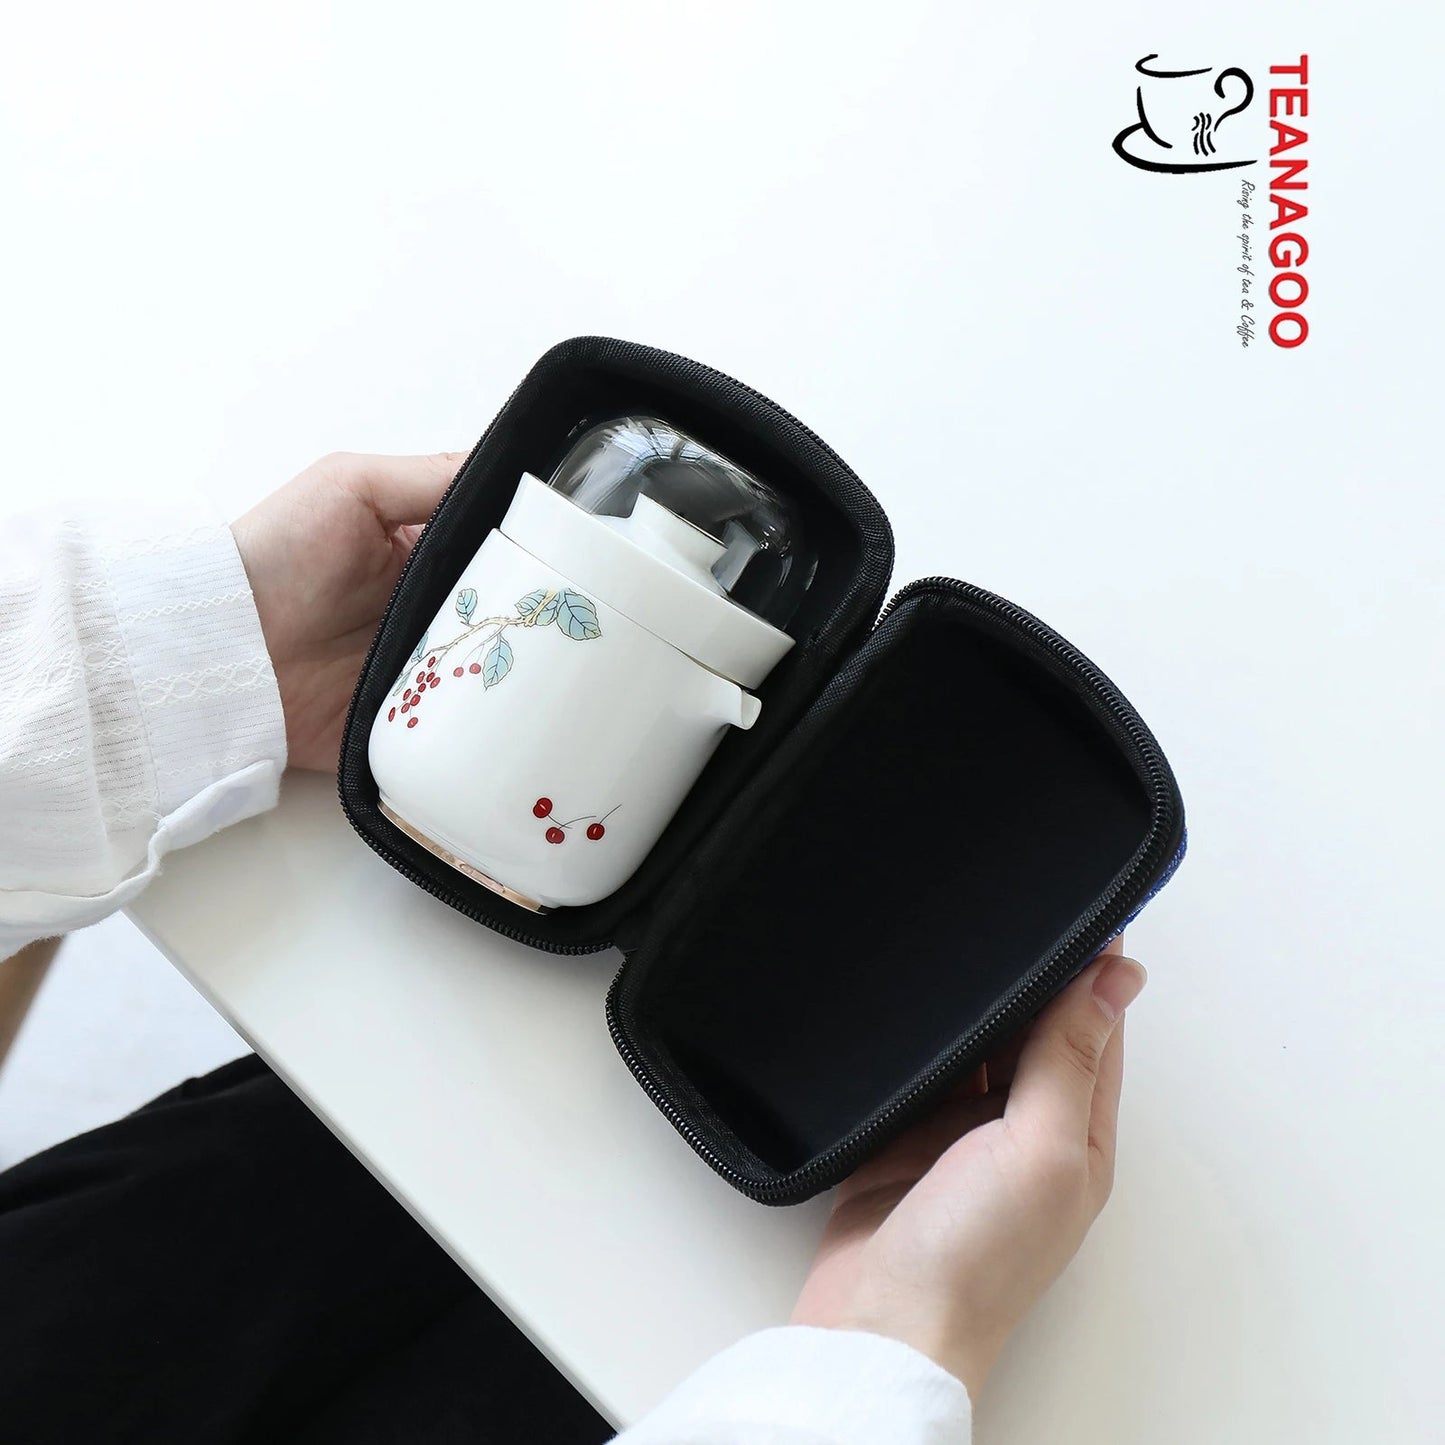 Portable Mini Travel Tea Set-Cherry Porcelain (TS07)